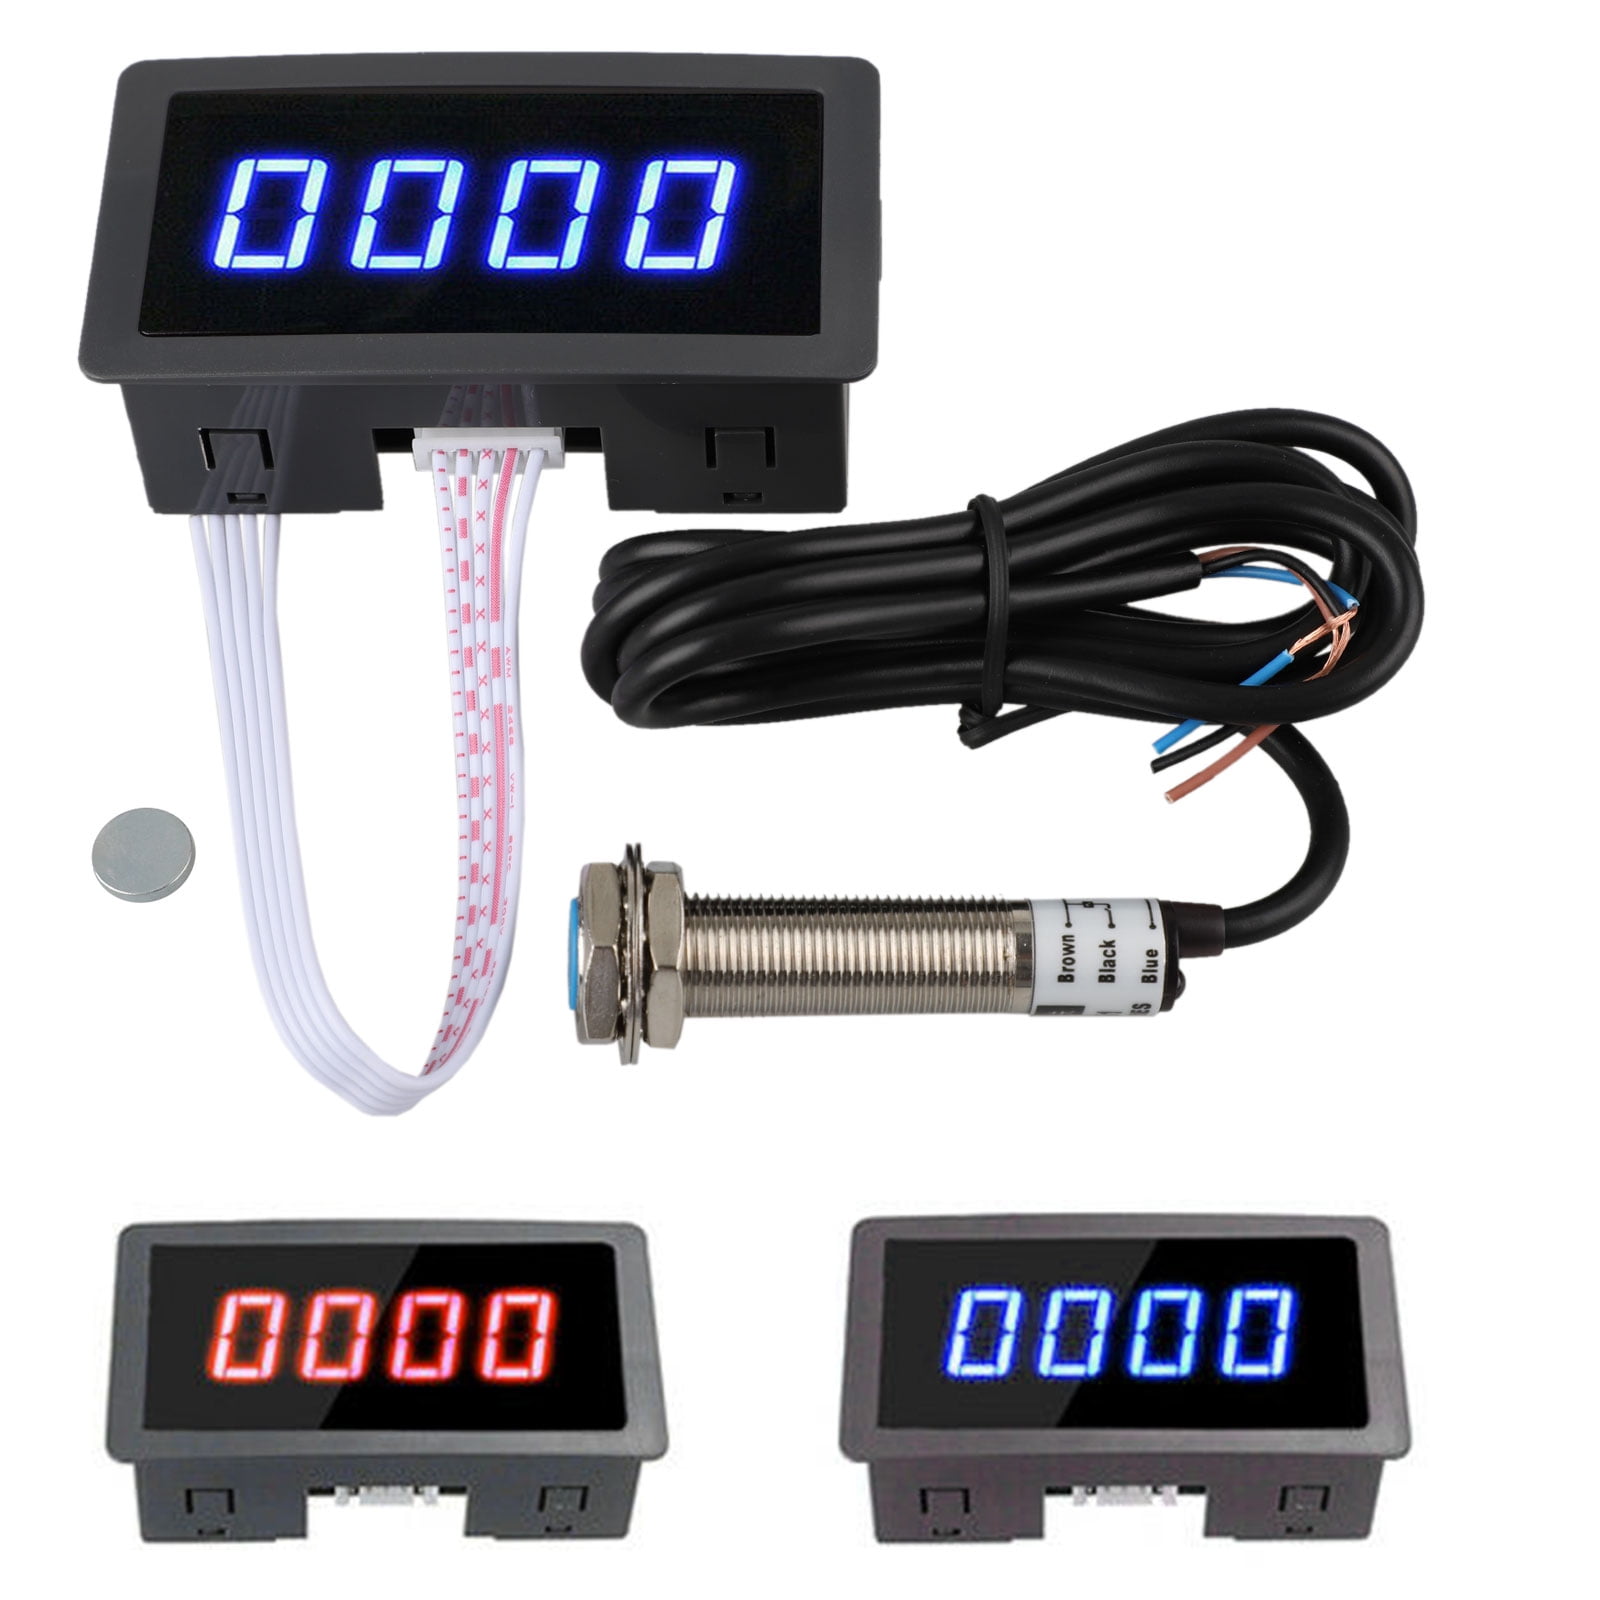 4 Digital LED Display Tachometer RPM Speed Meter High Precision Tachometer With Hall Proximity Switch Sensor NPN